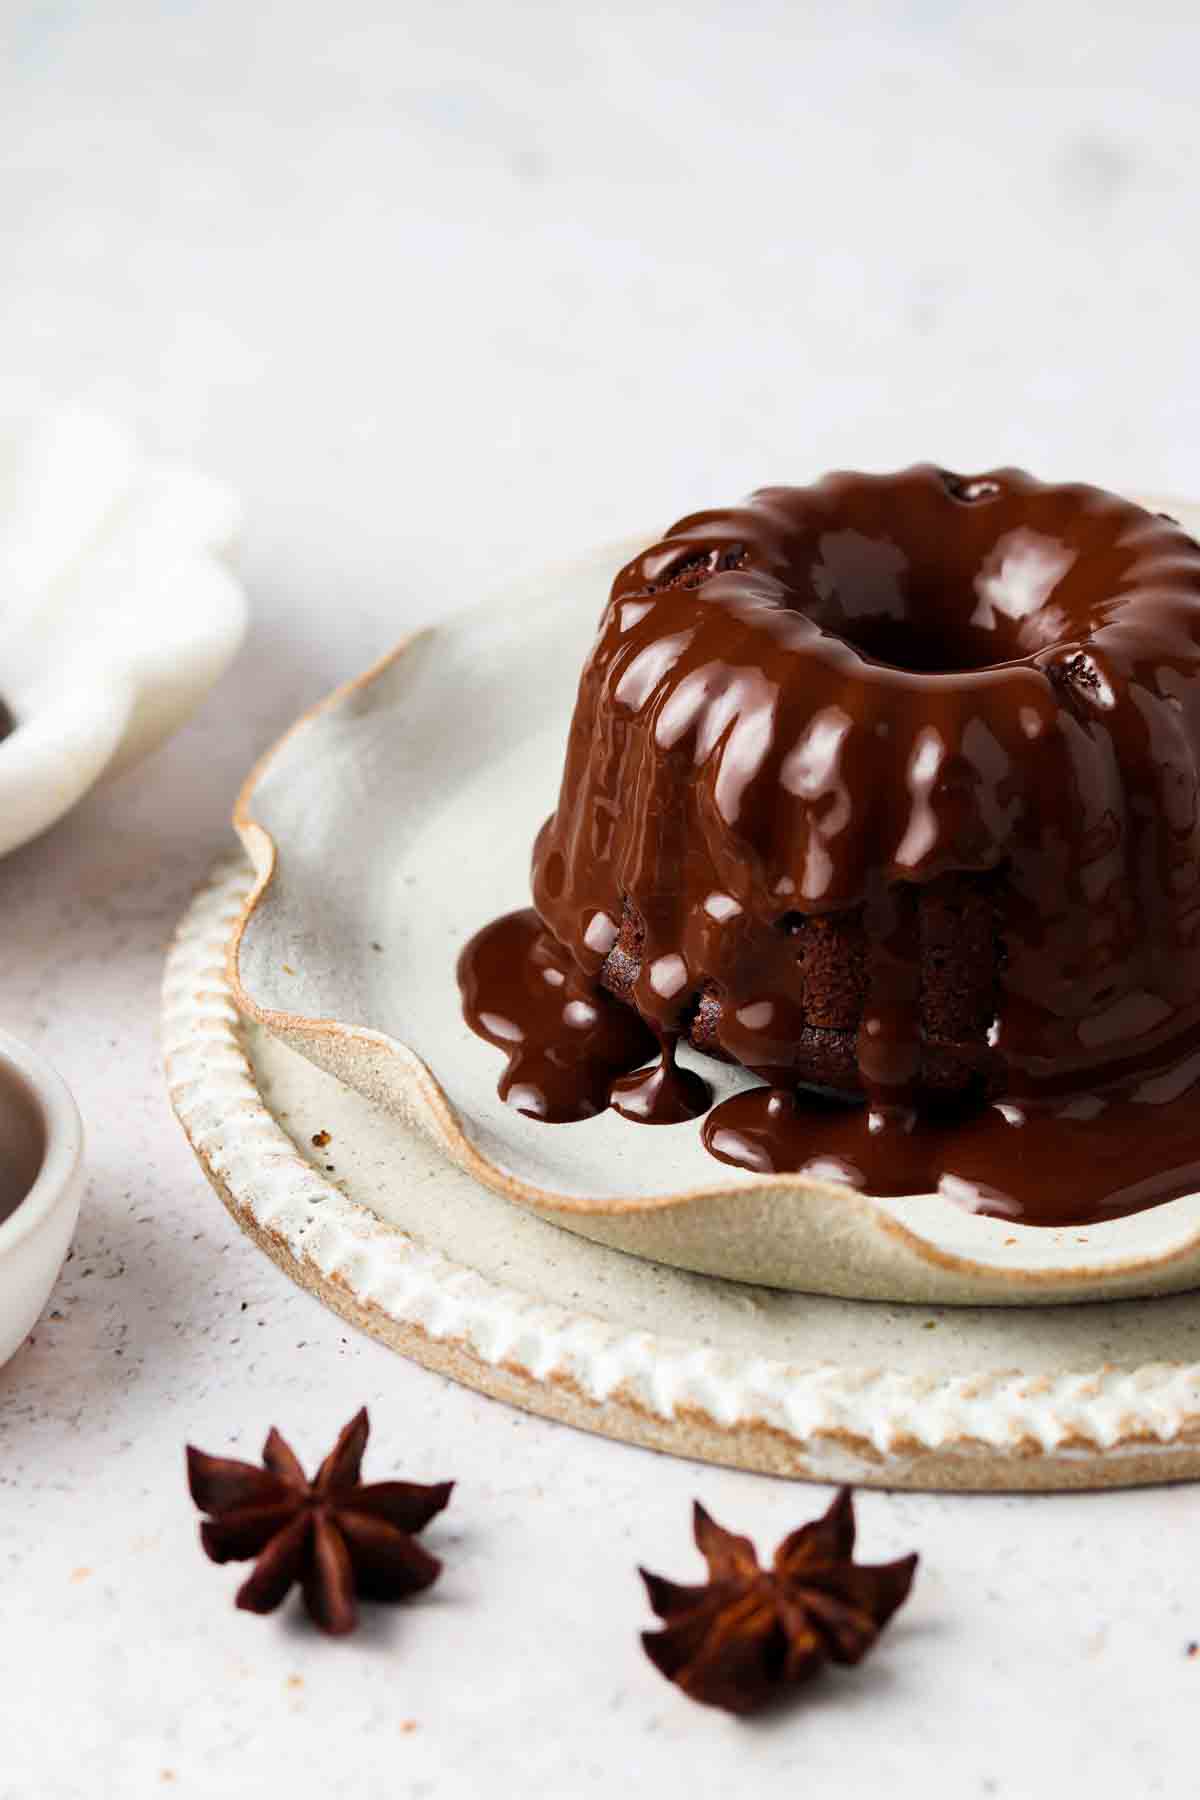 Mini chocolate bundt cake on a plate with silky chocolate ganache on top.